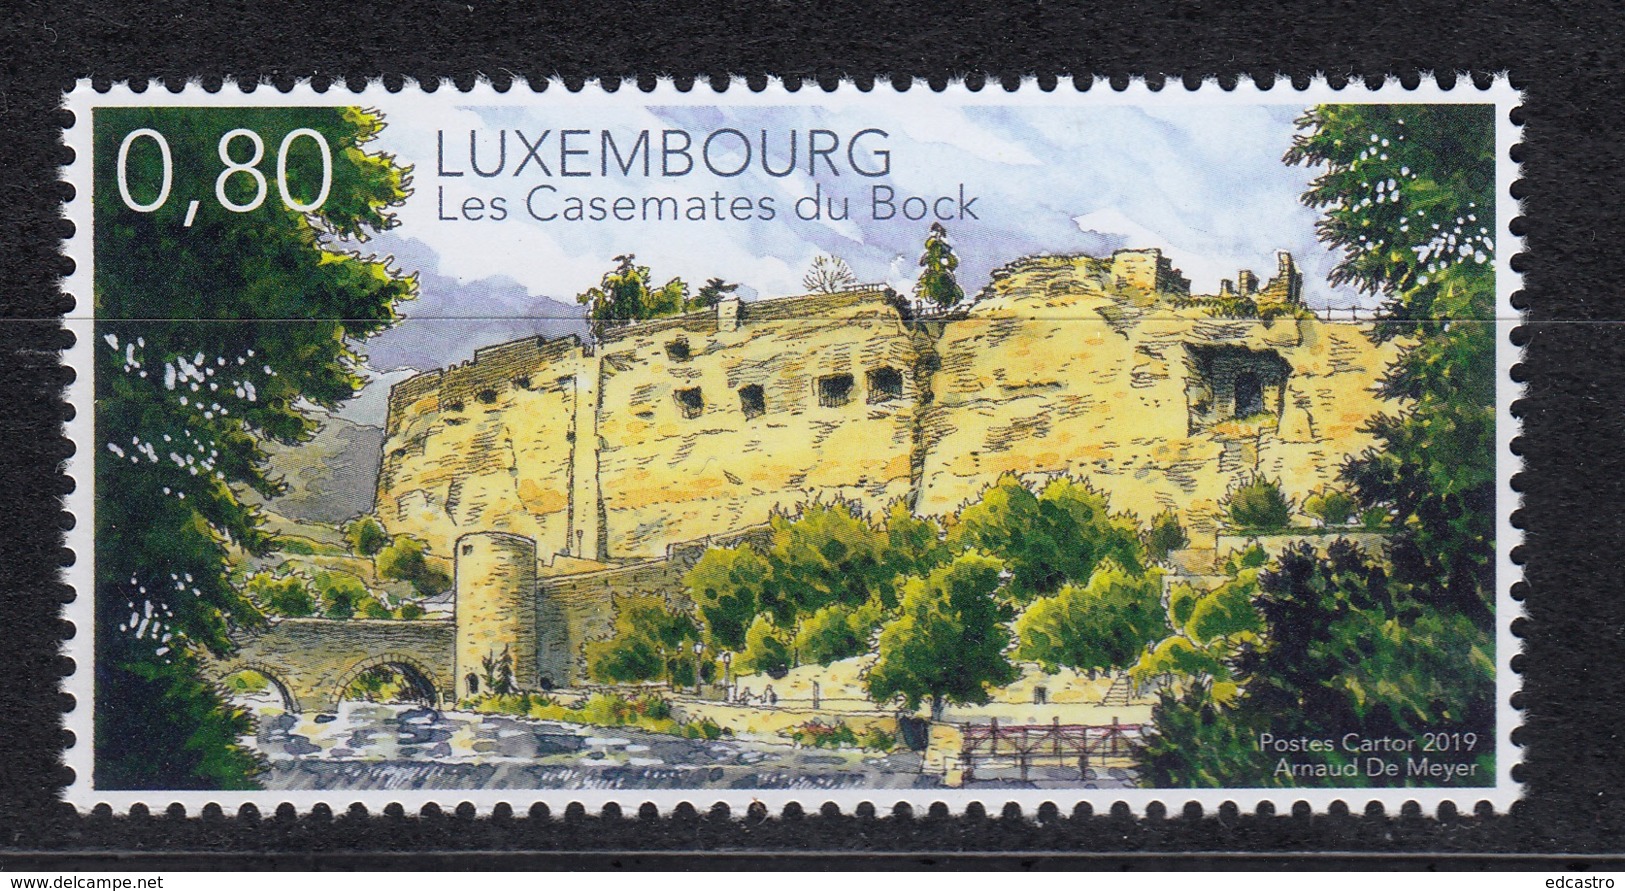 19.- LUXEMBOURG 2019 LES CASEMATES - ARCHITECTURE - Unused Stamps